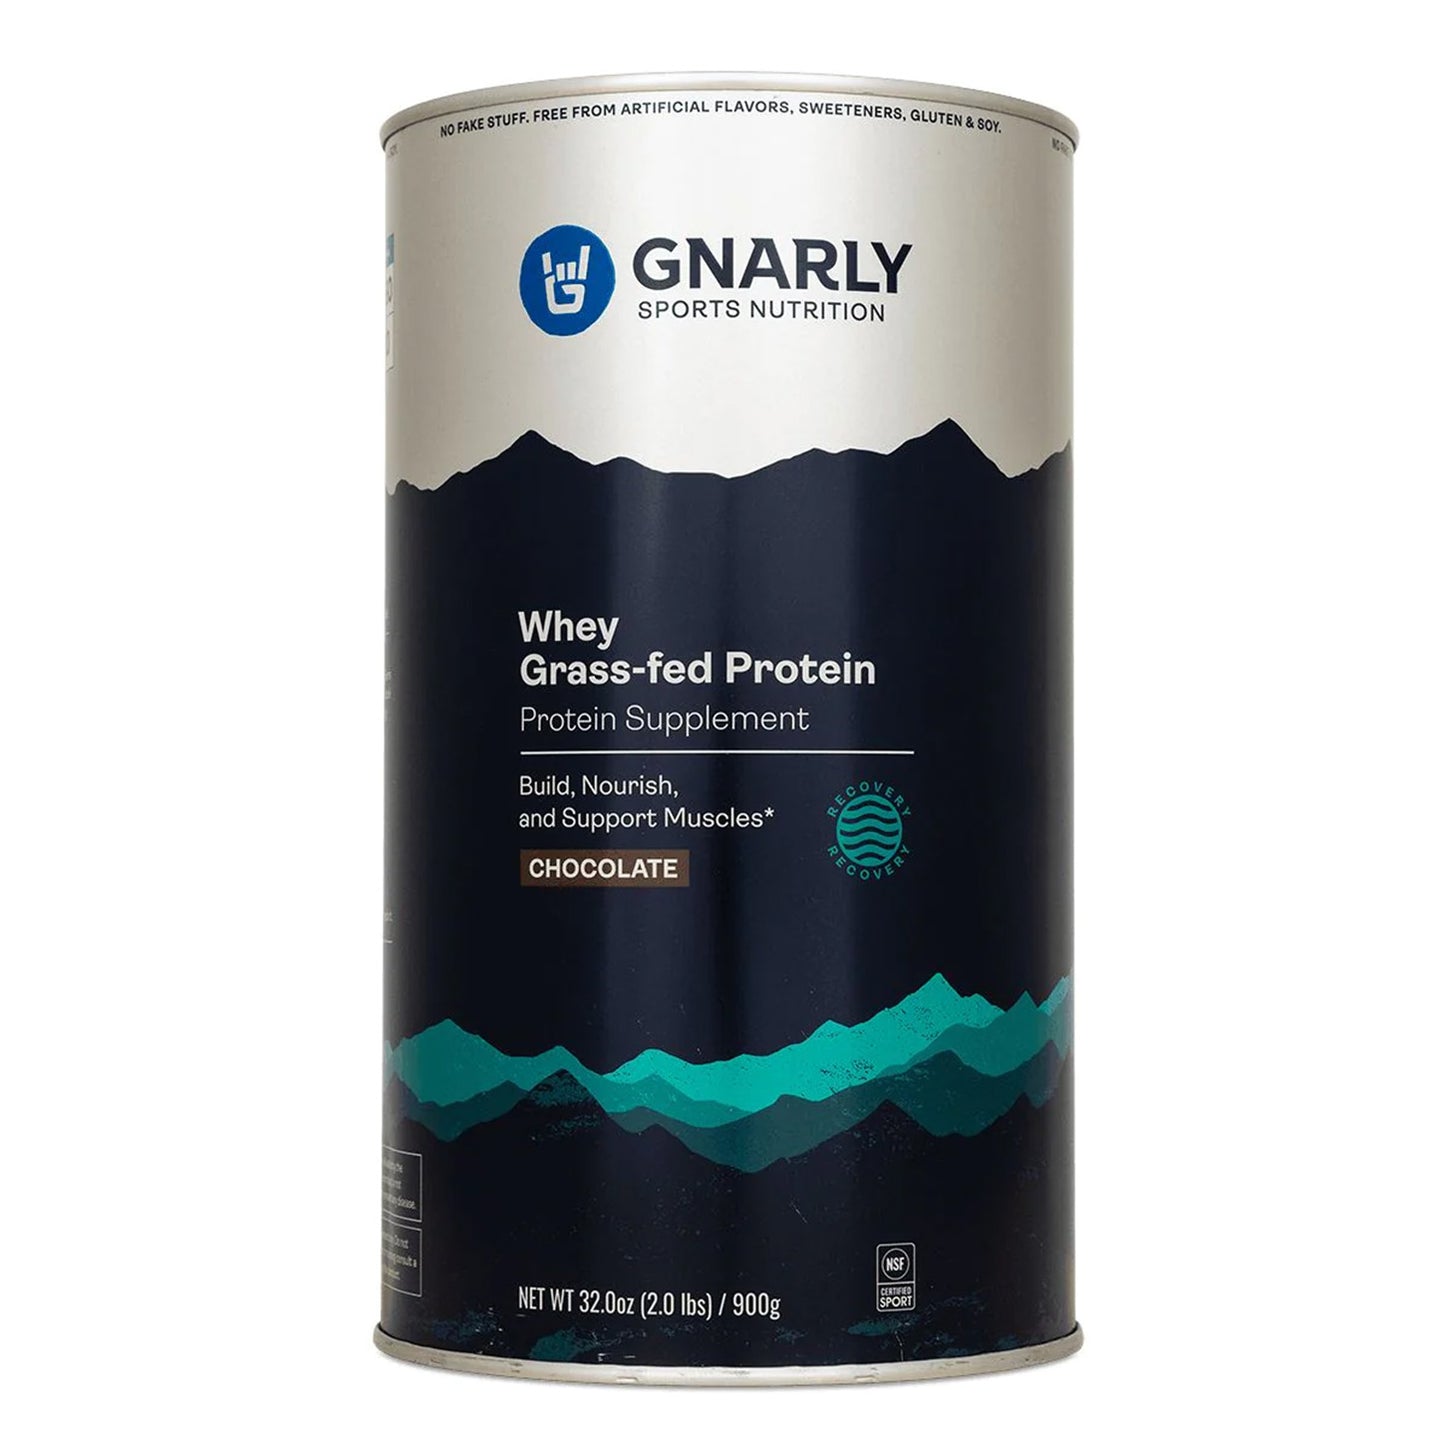 Optimiza tu Rendimiento con Gnarly Whey de Gnarly Sport Nutrition | ProHealth Shop [Panamá]